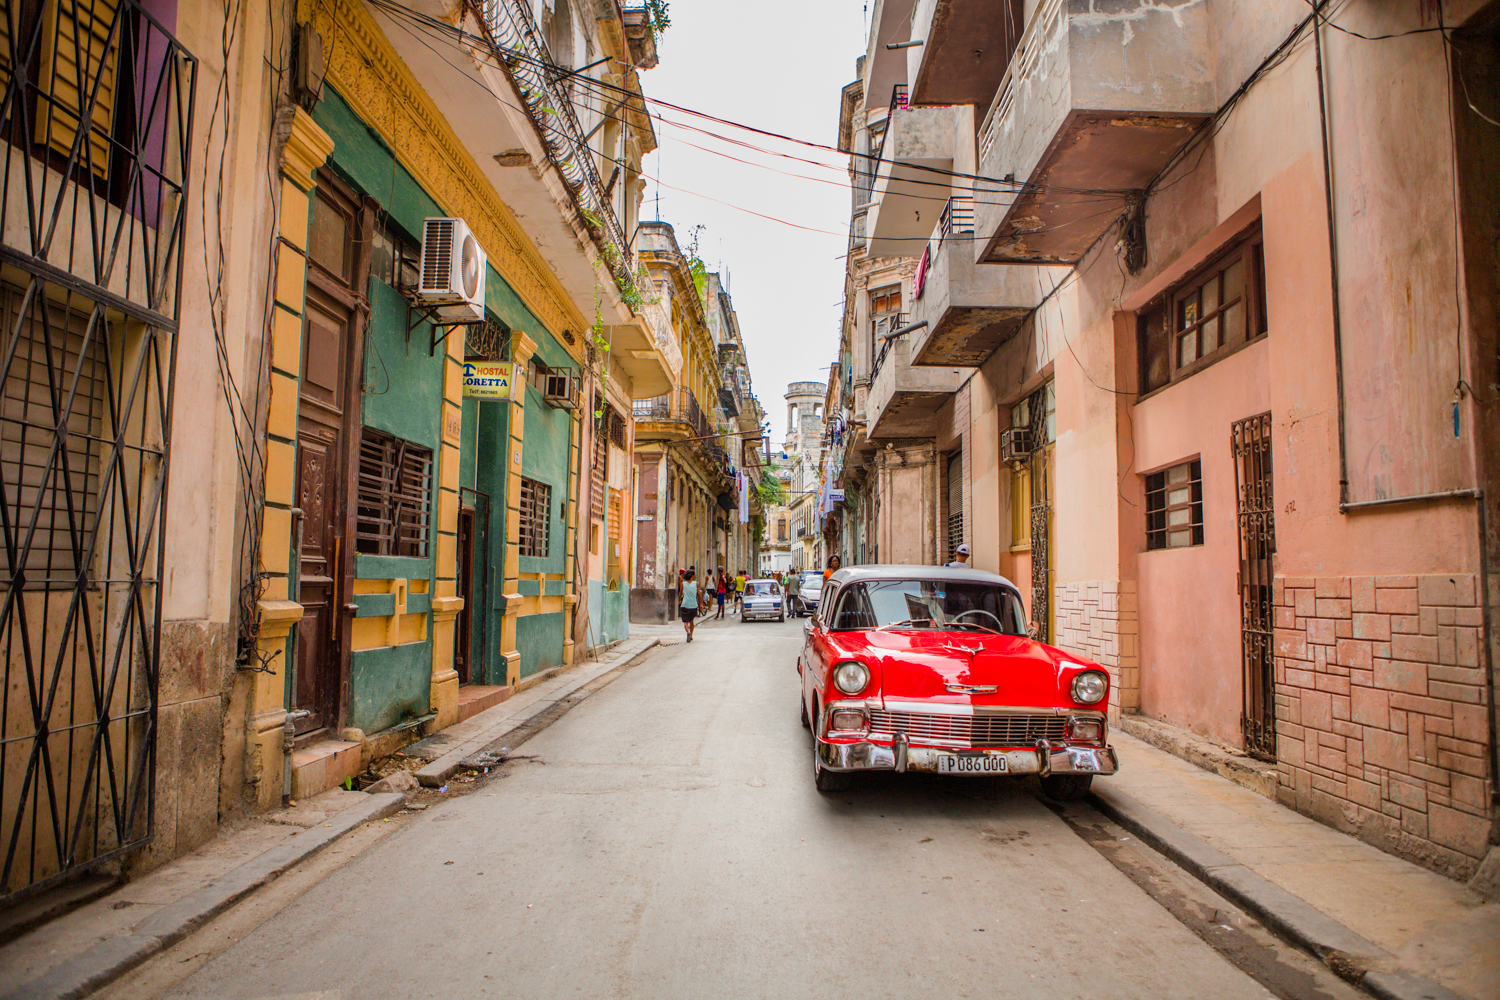 Havana Cuba, so then they say